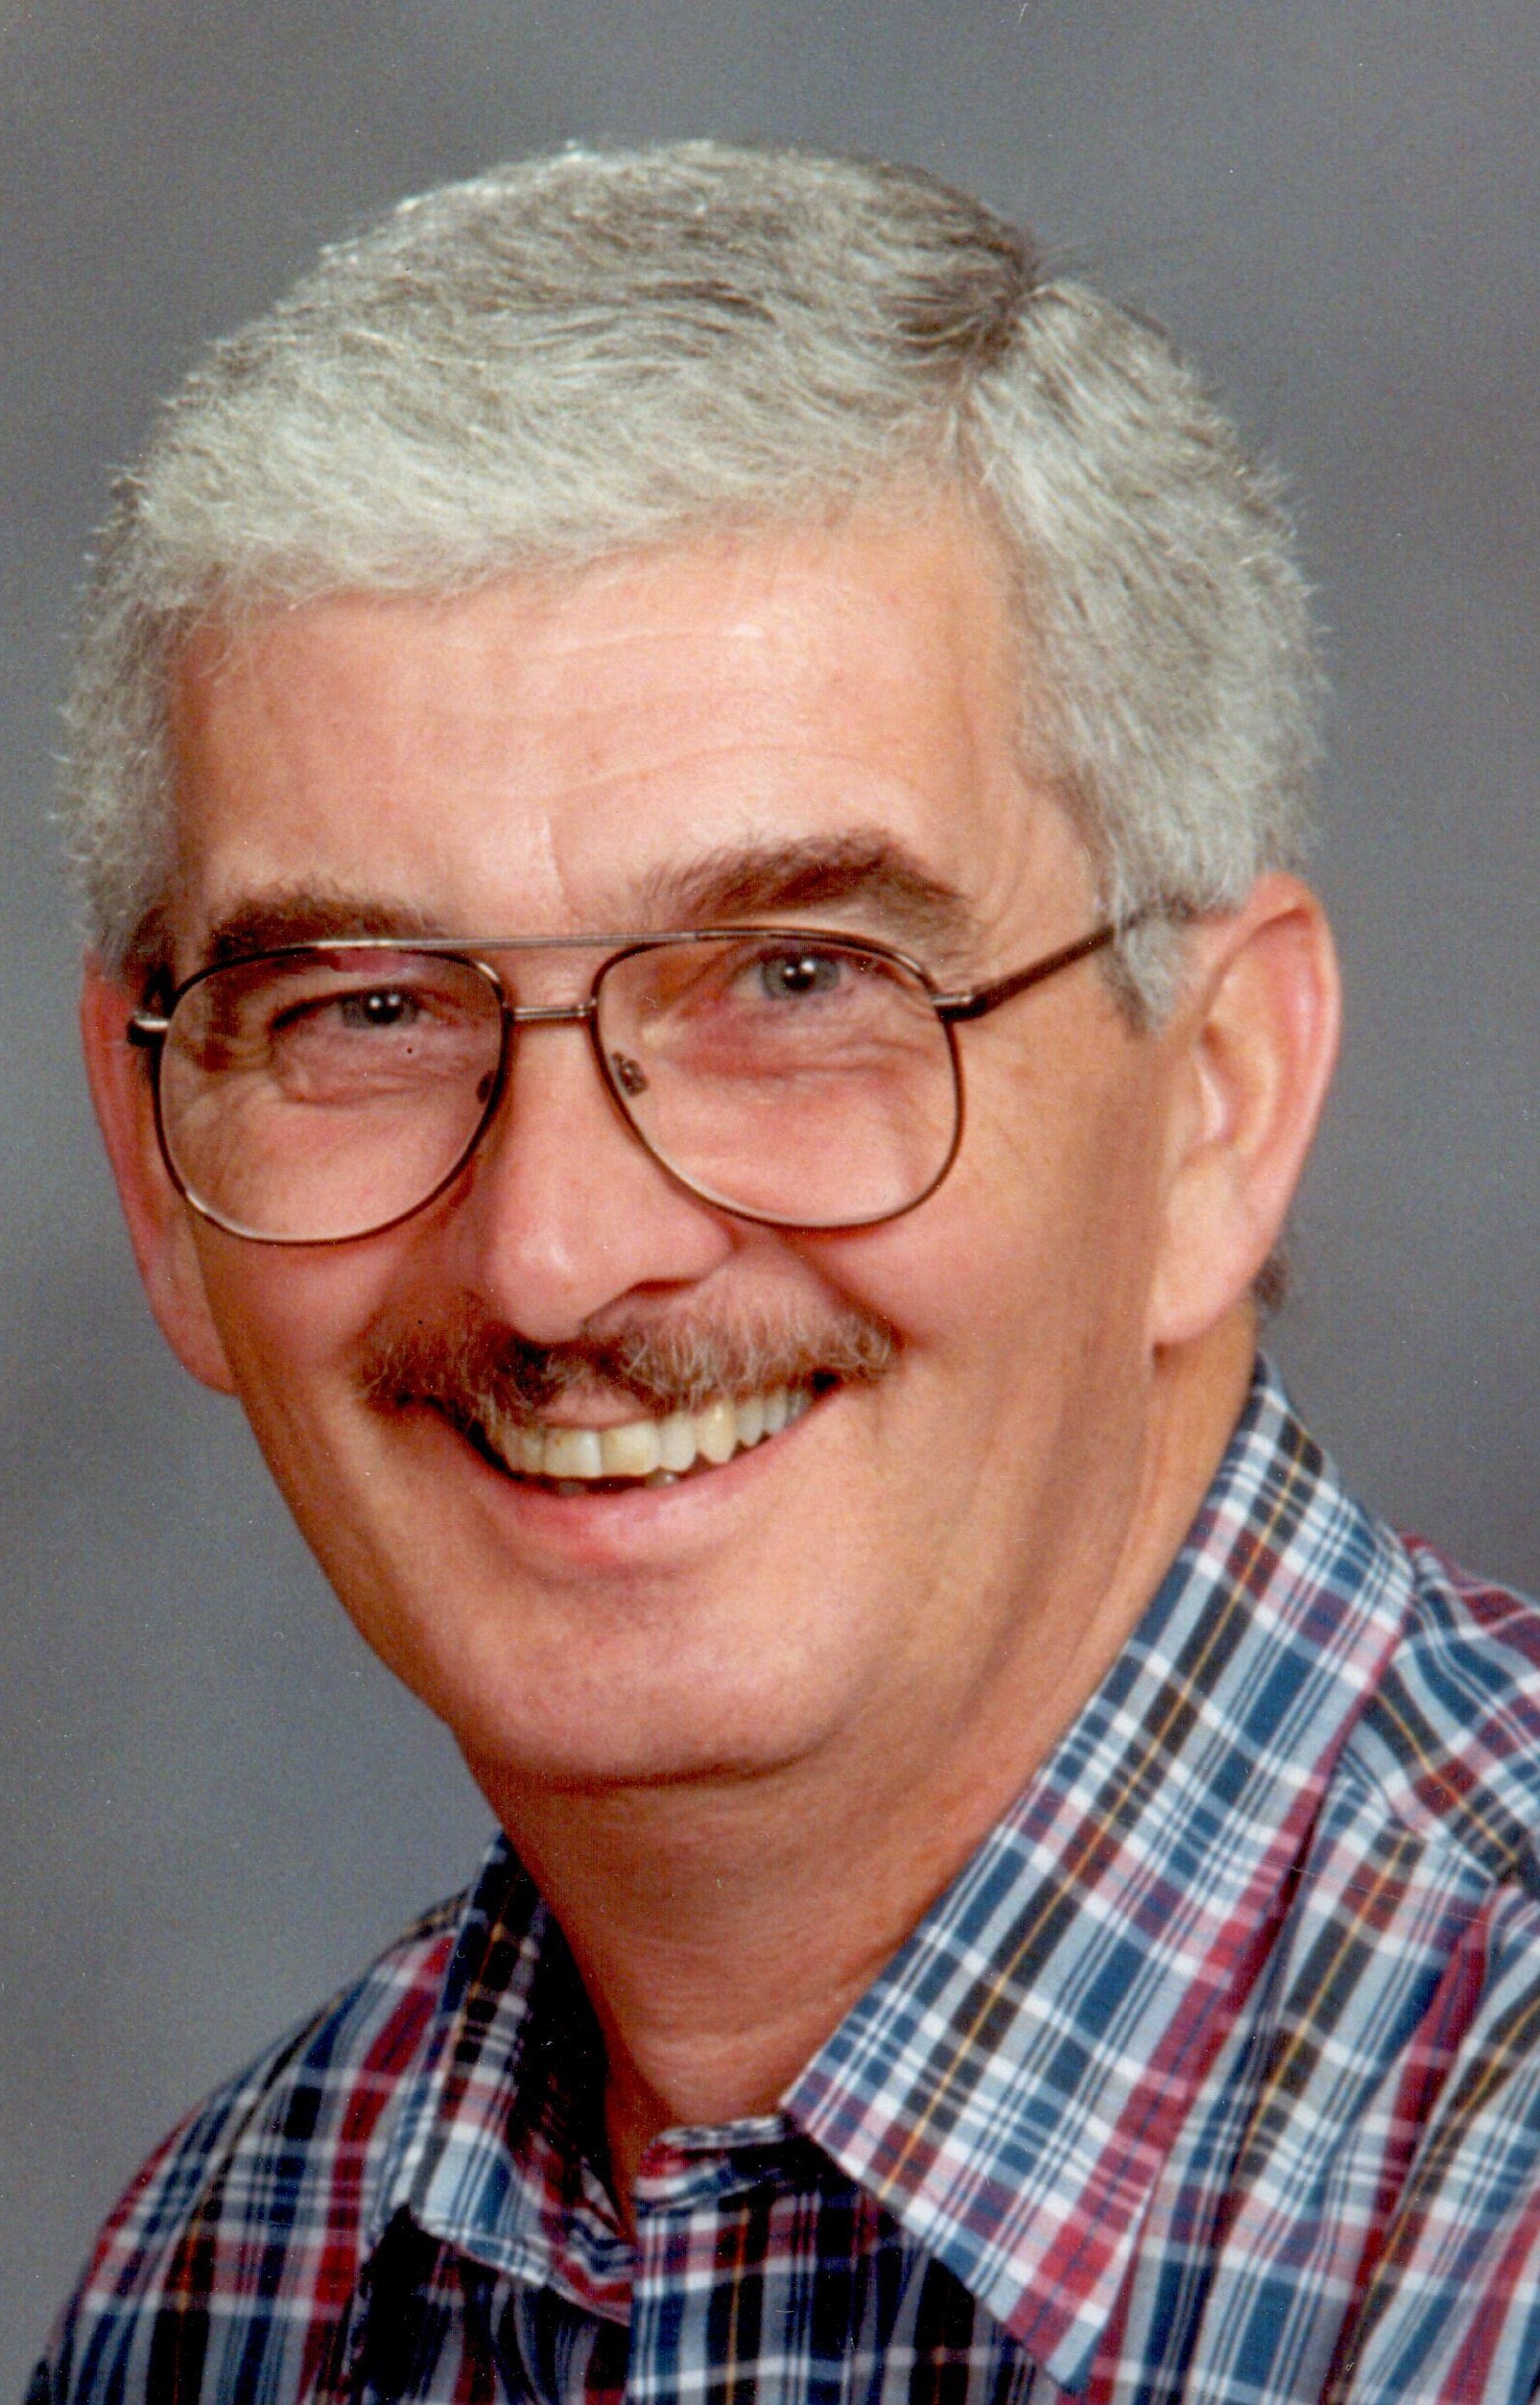 Obituary – Goshen-George L. Neild, age 65